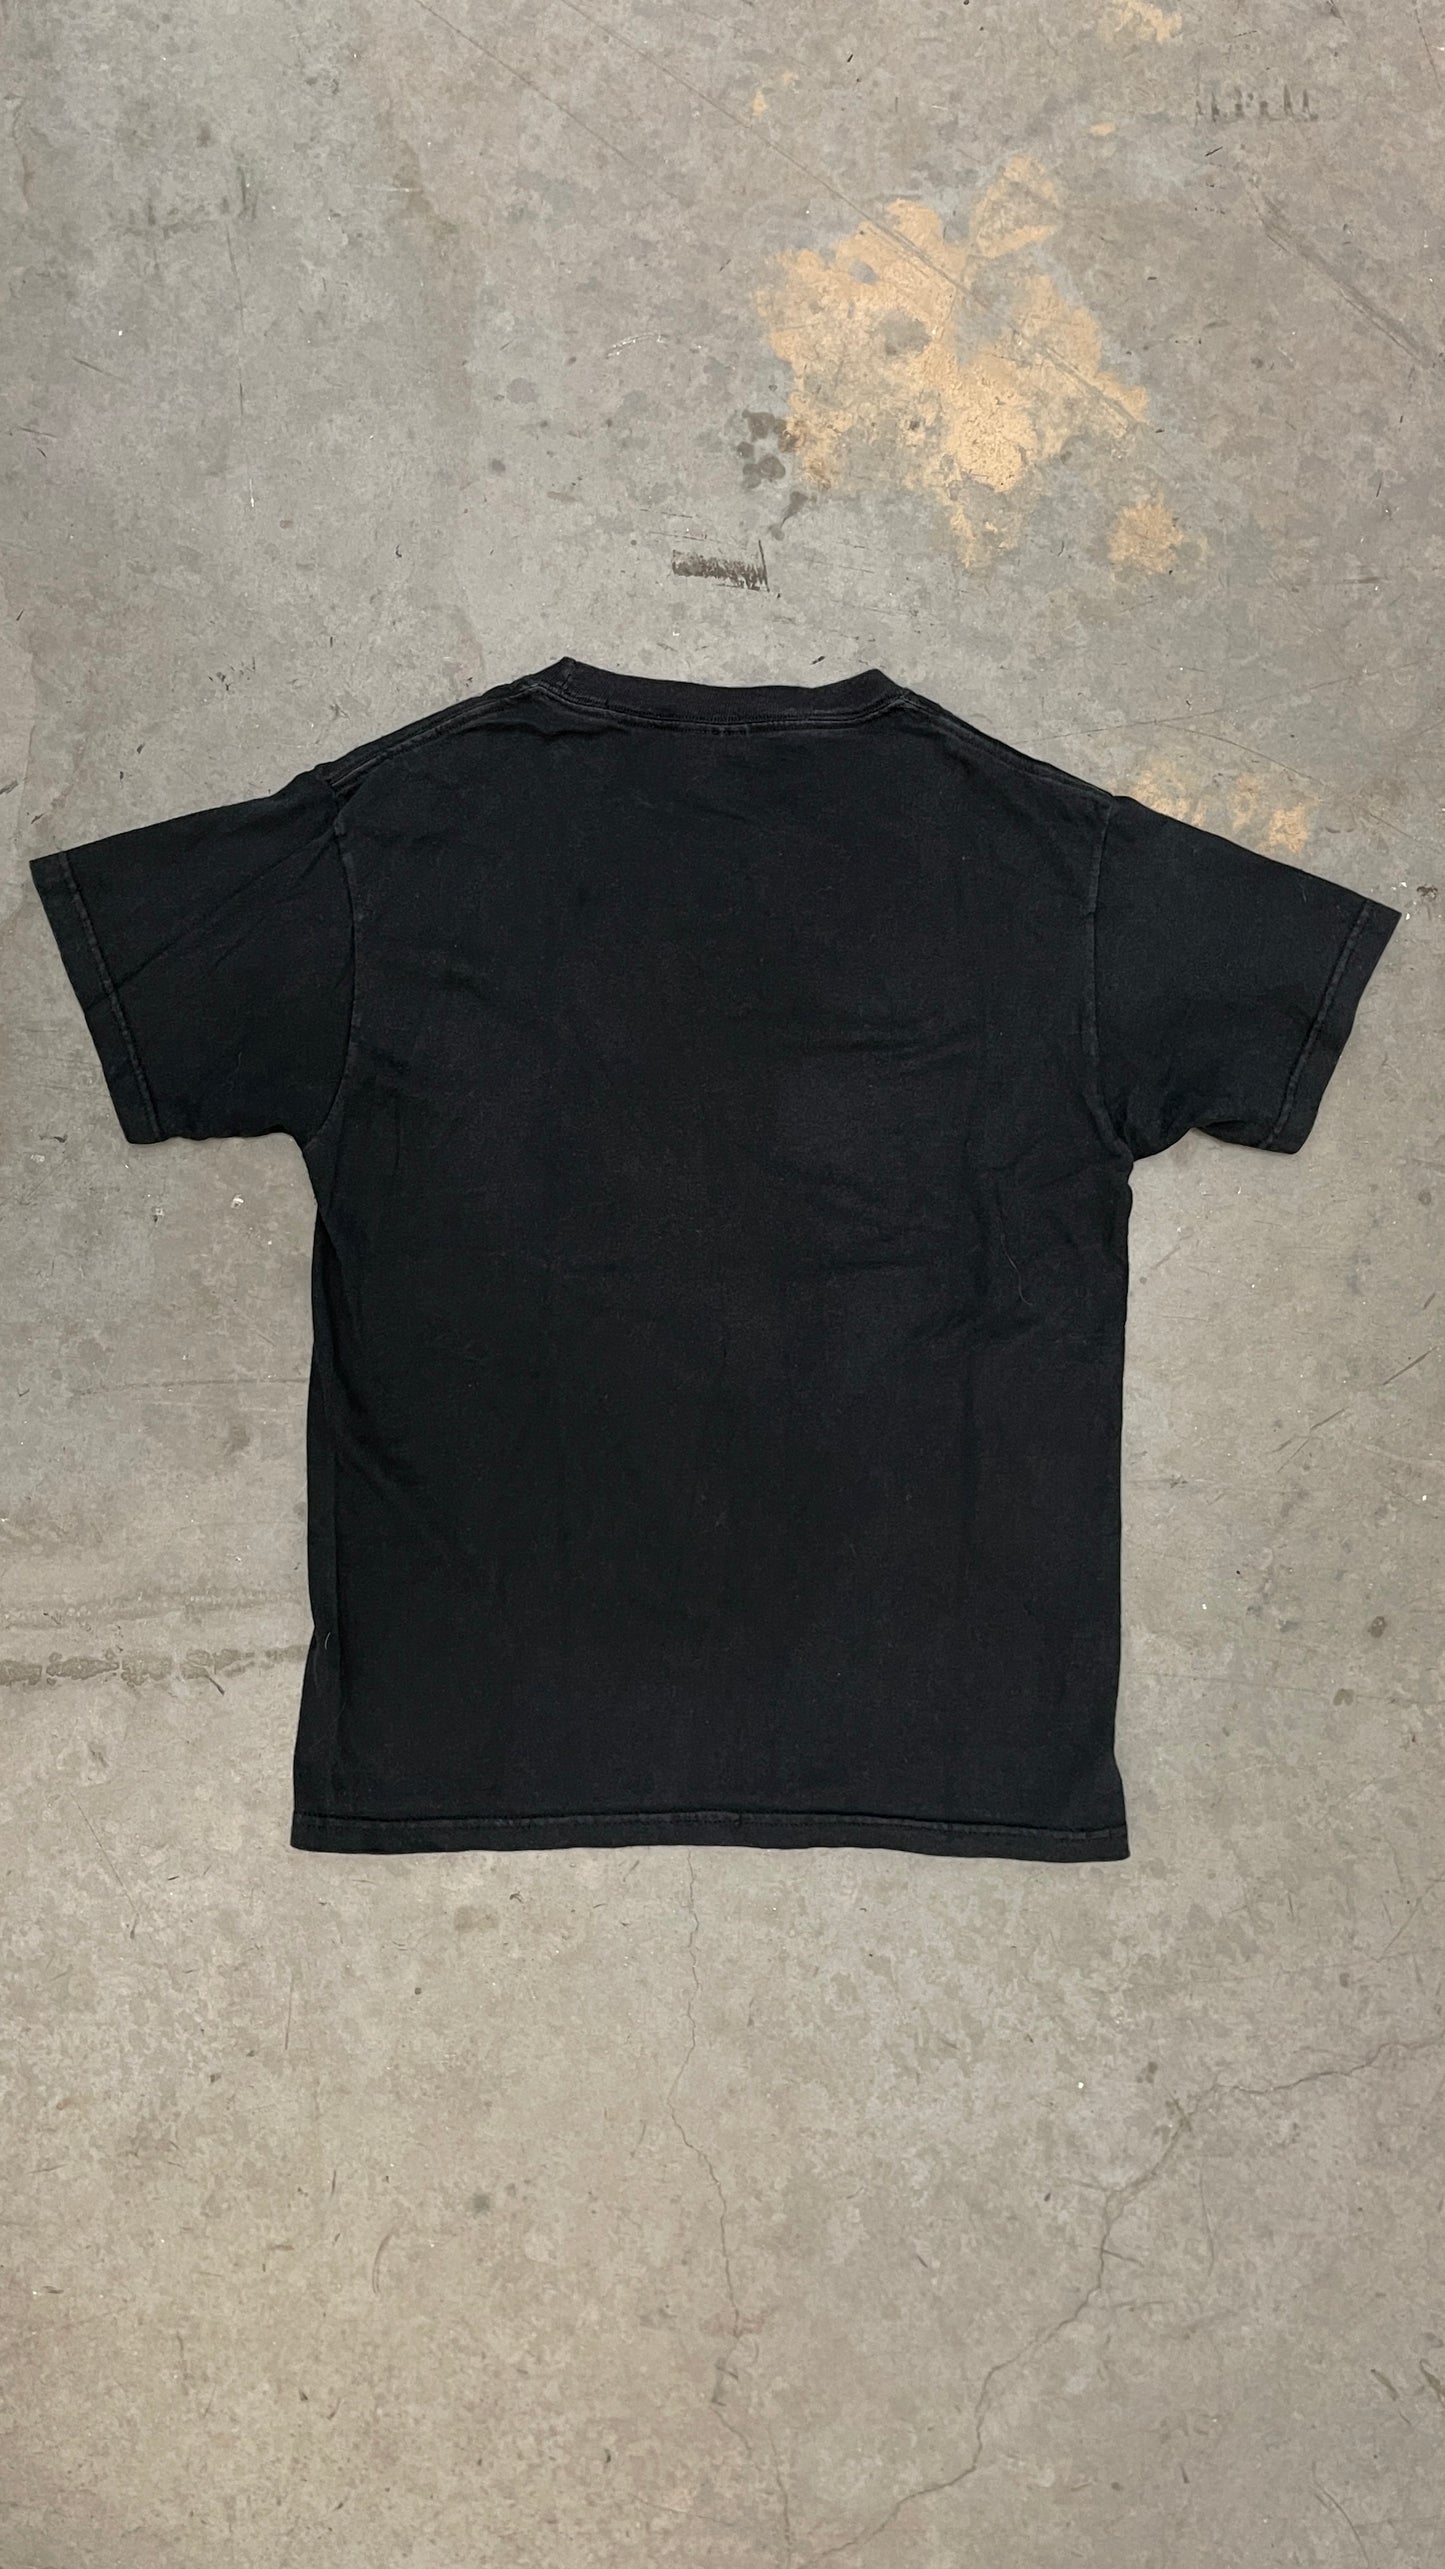 Shadow Falls Band T-Shirt  Size: Small